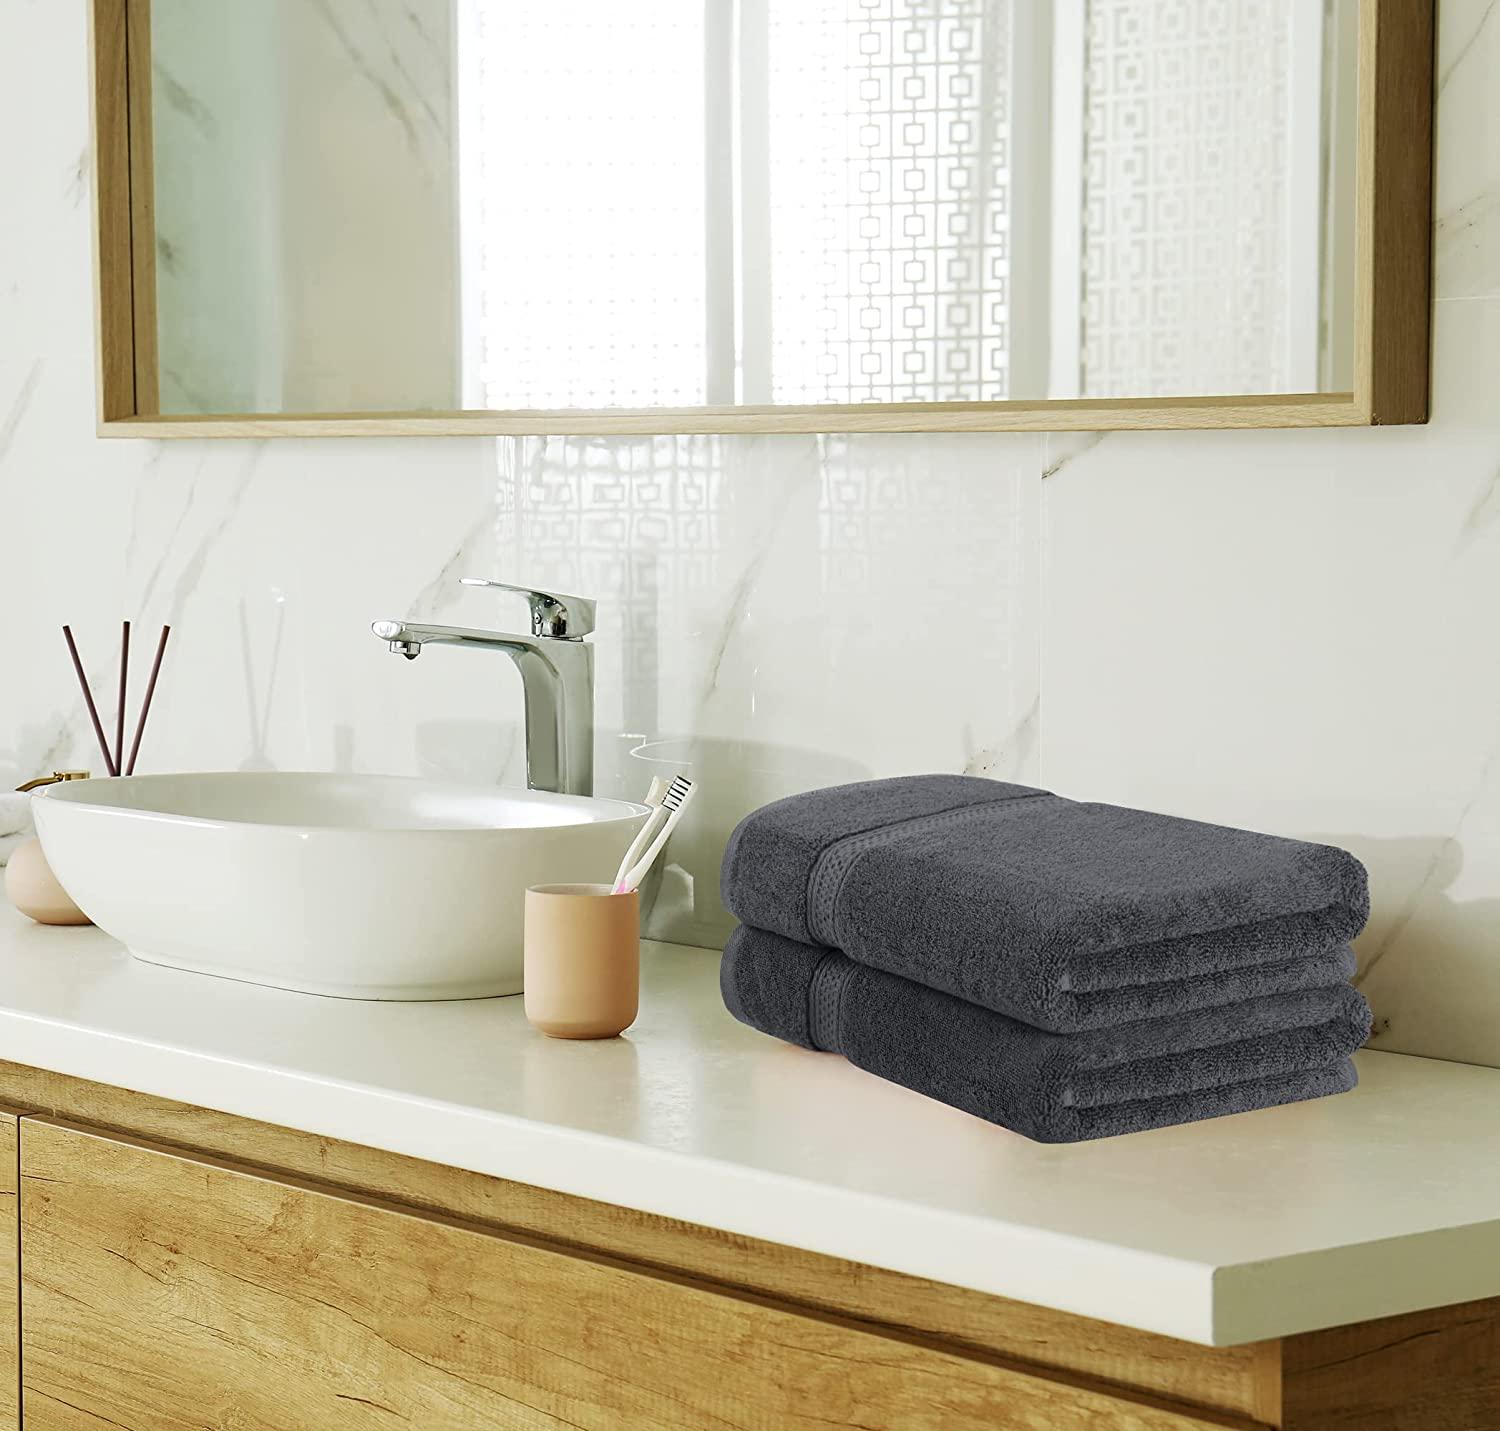 Utopia Towels 8-Piece Luxury Towel Set, 2 Bath Towels, 2 Hand Towels, and 4  Wash